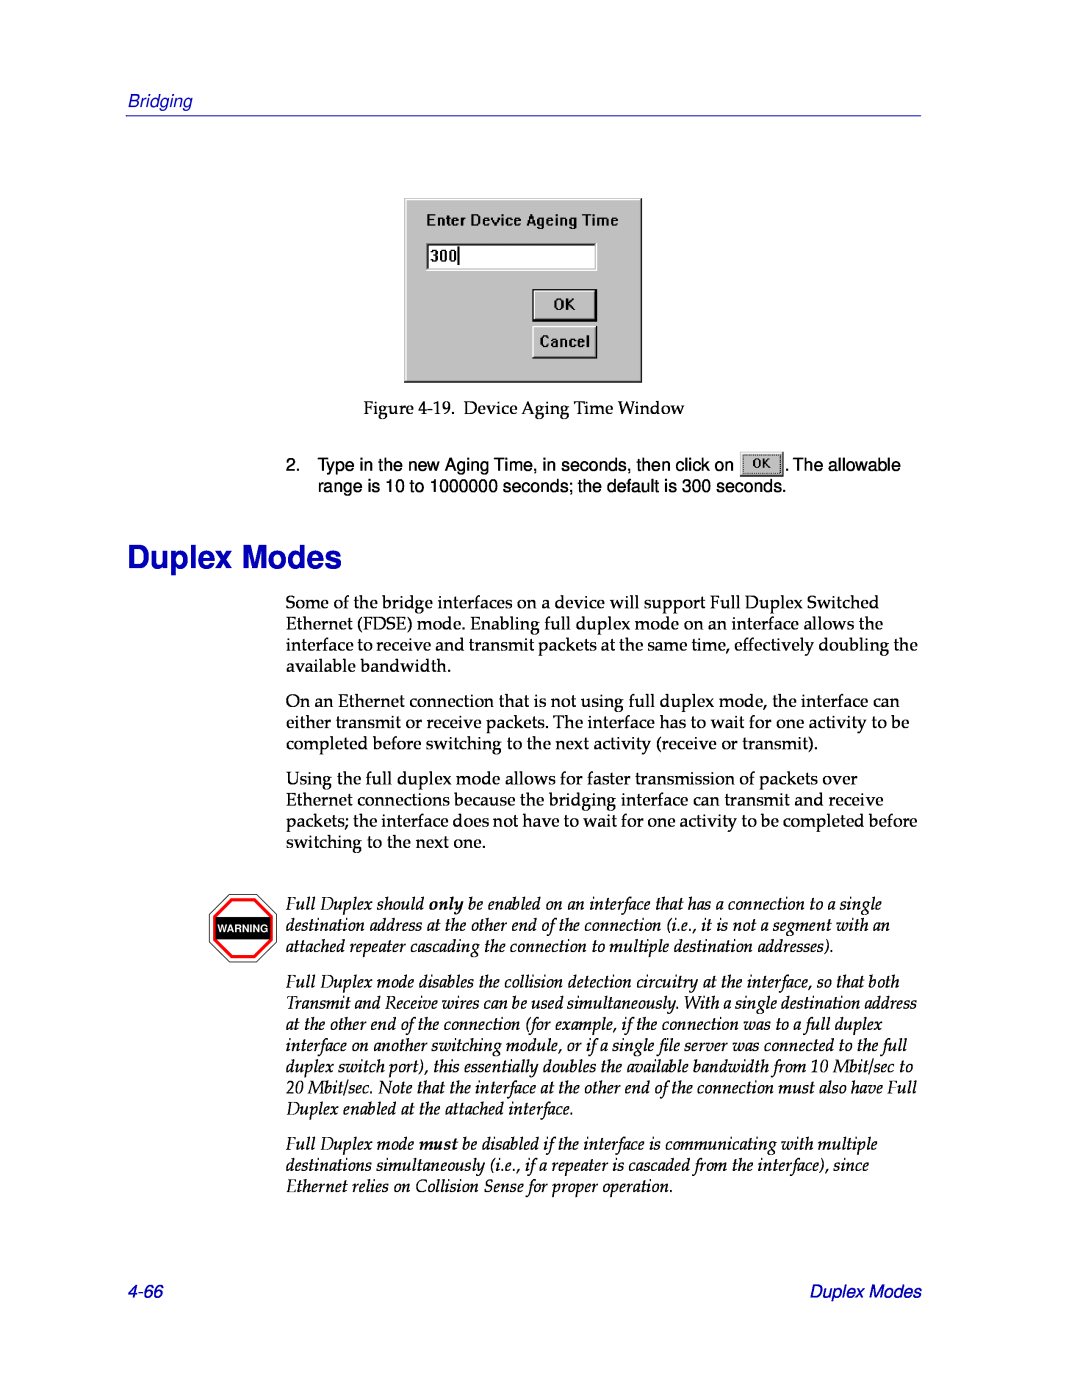 Cabletron Systems CSX400, CSX200 manual Duplex Modes, 4-66, Bridging 